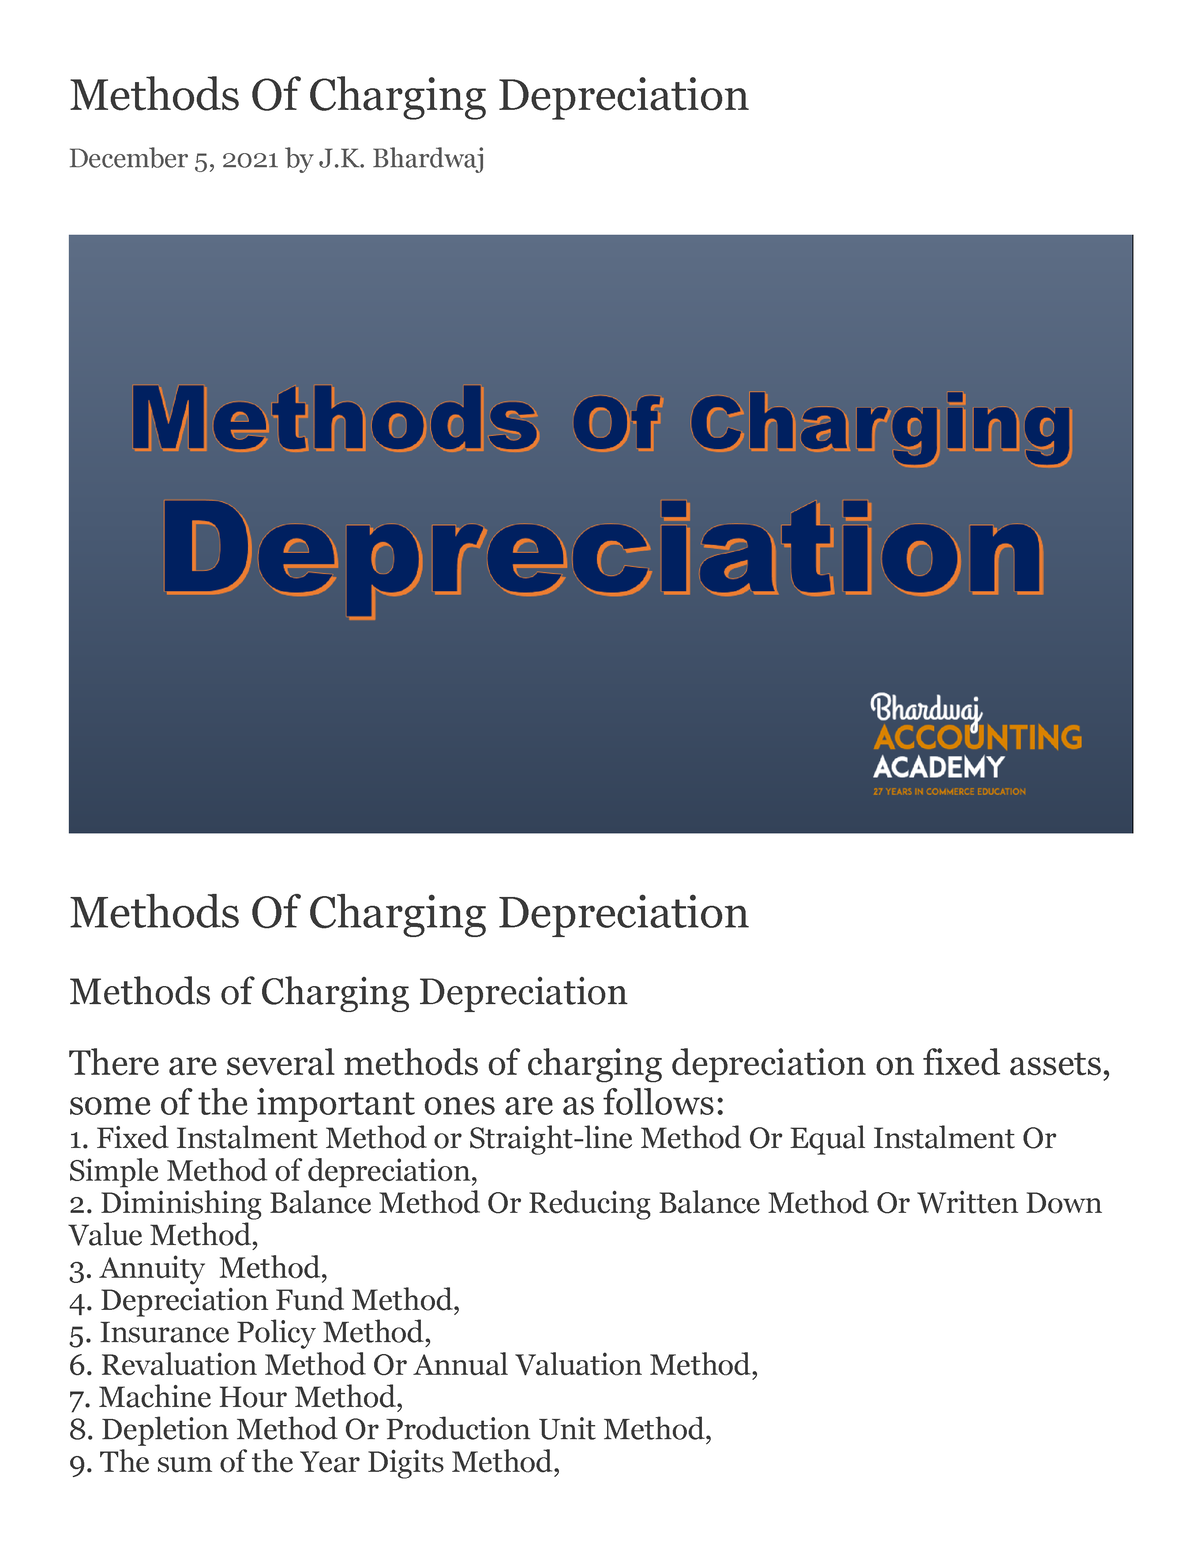 Methods of Charging Depreciation Important 2021 Methods Of Charging